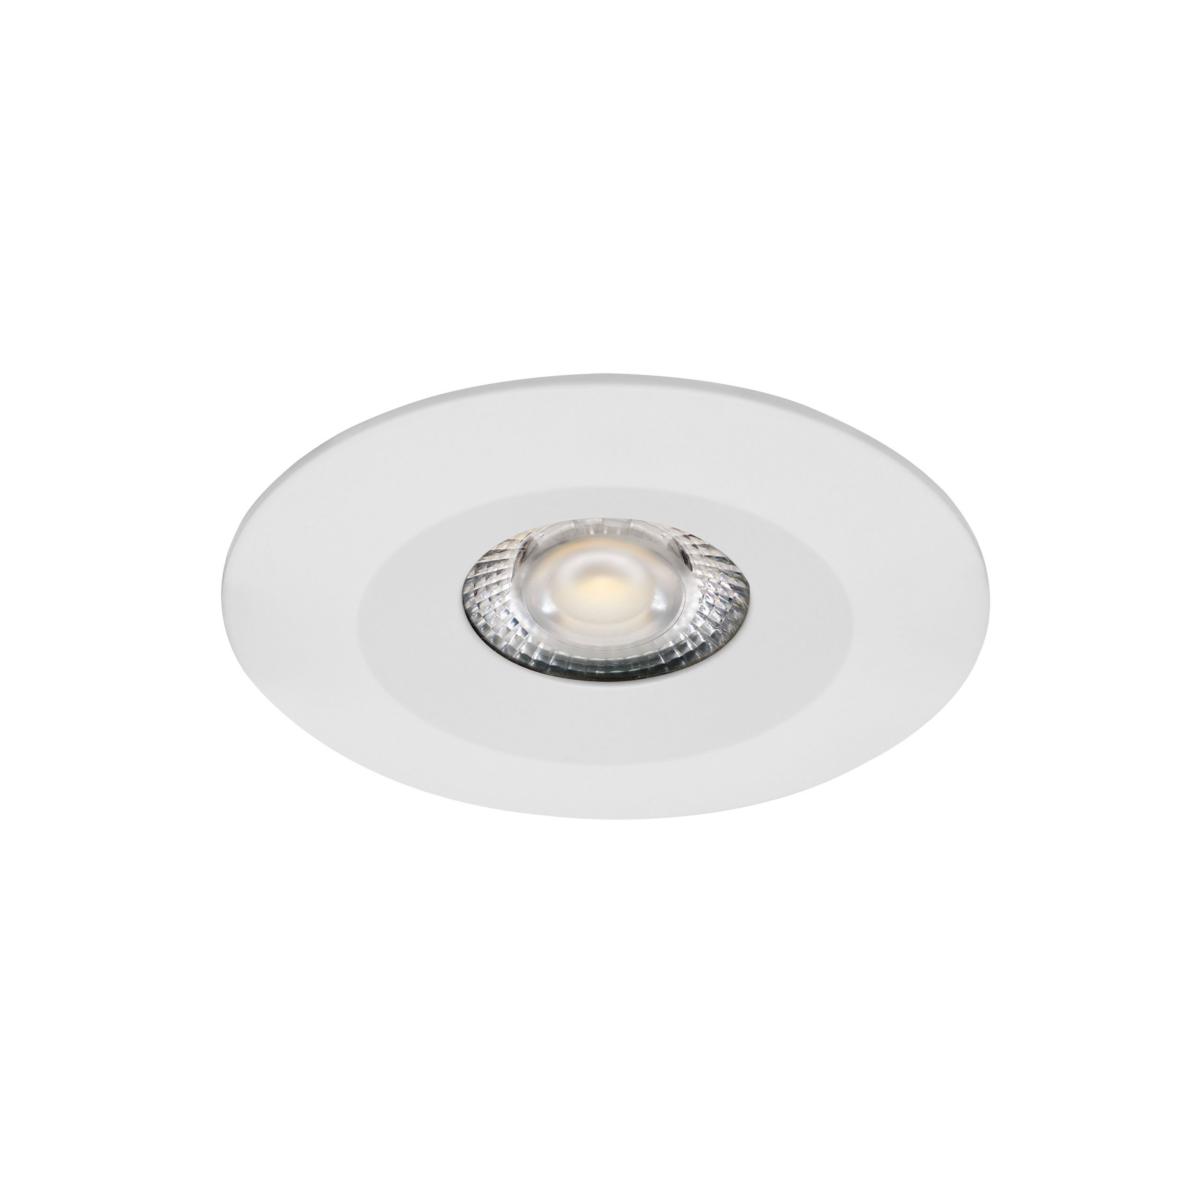 Spot plafond salle de bain LED dimmable 1 lampe Nerr